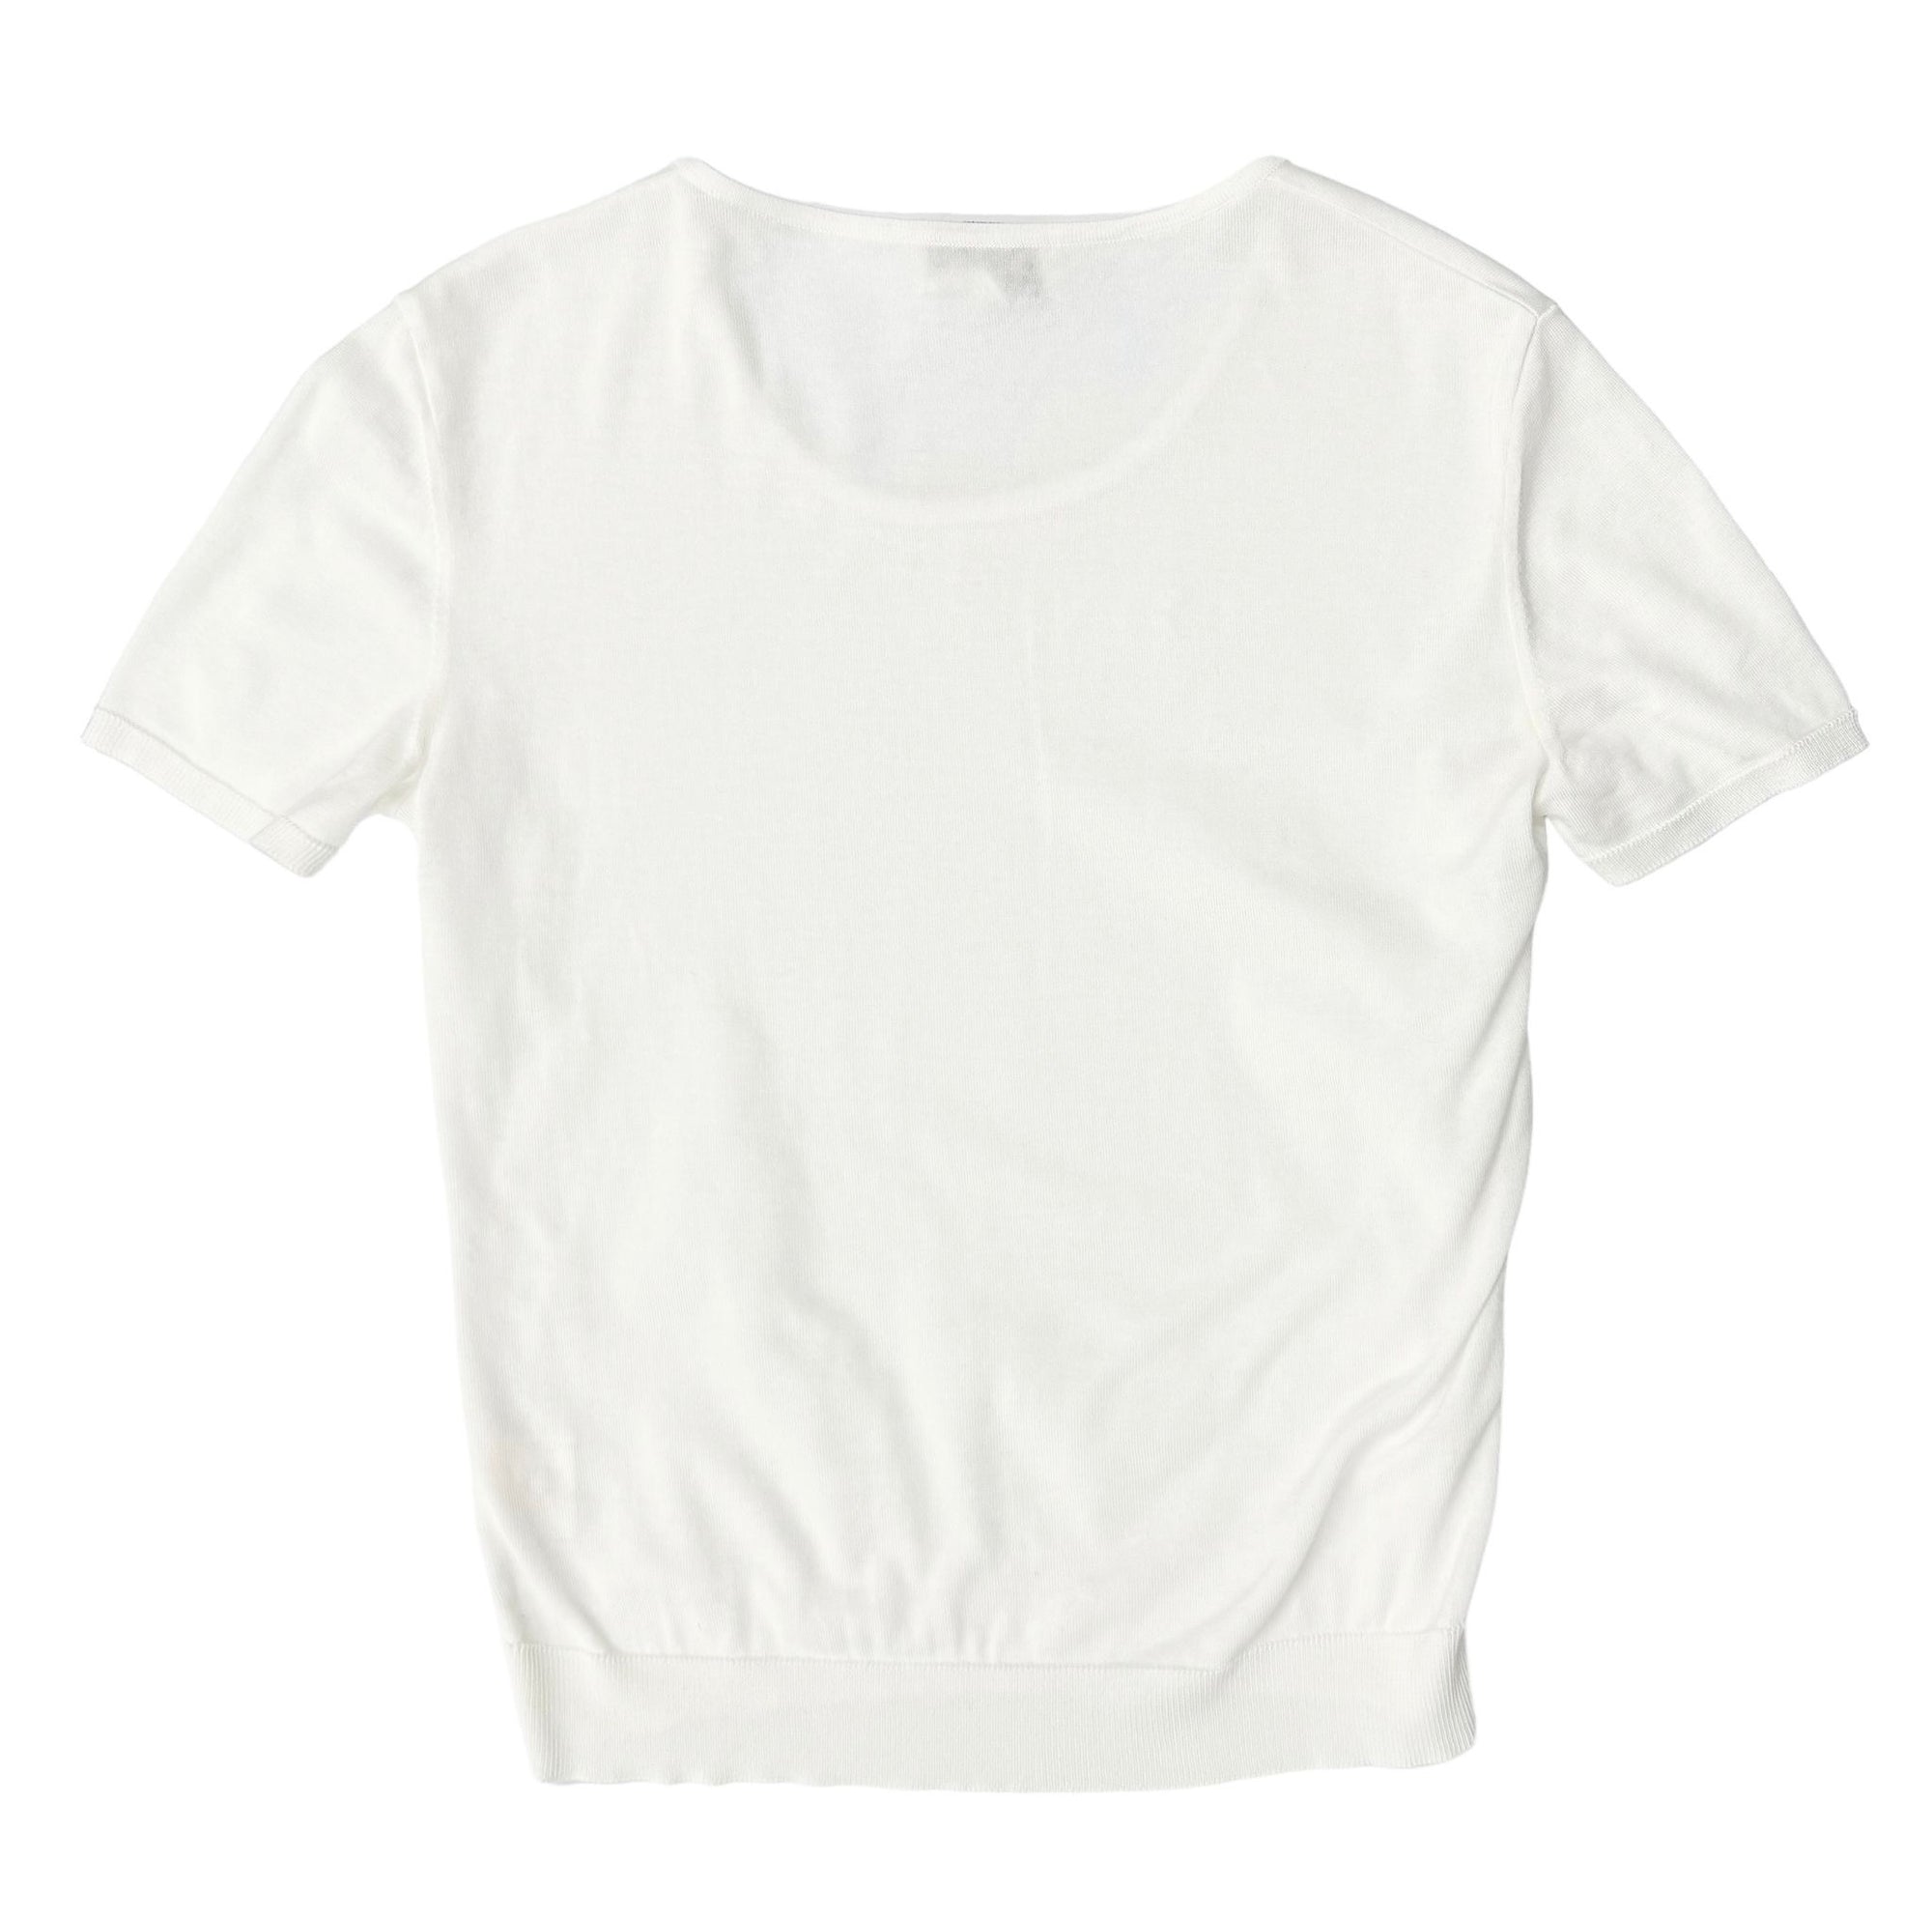 Chanel White Short Sleeve Logo Top